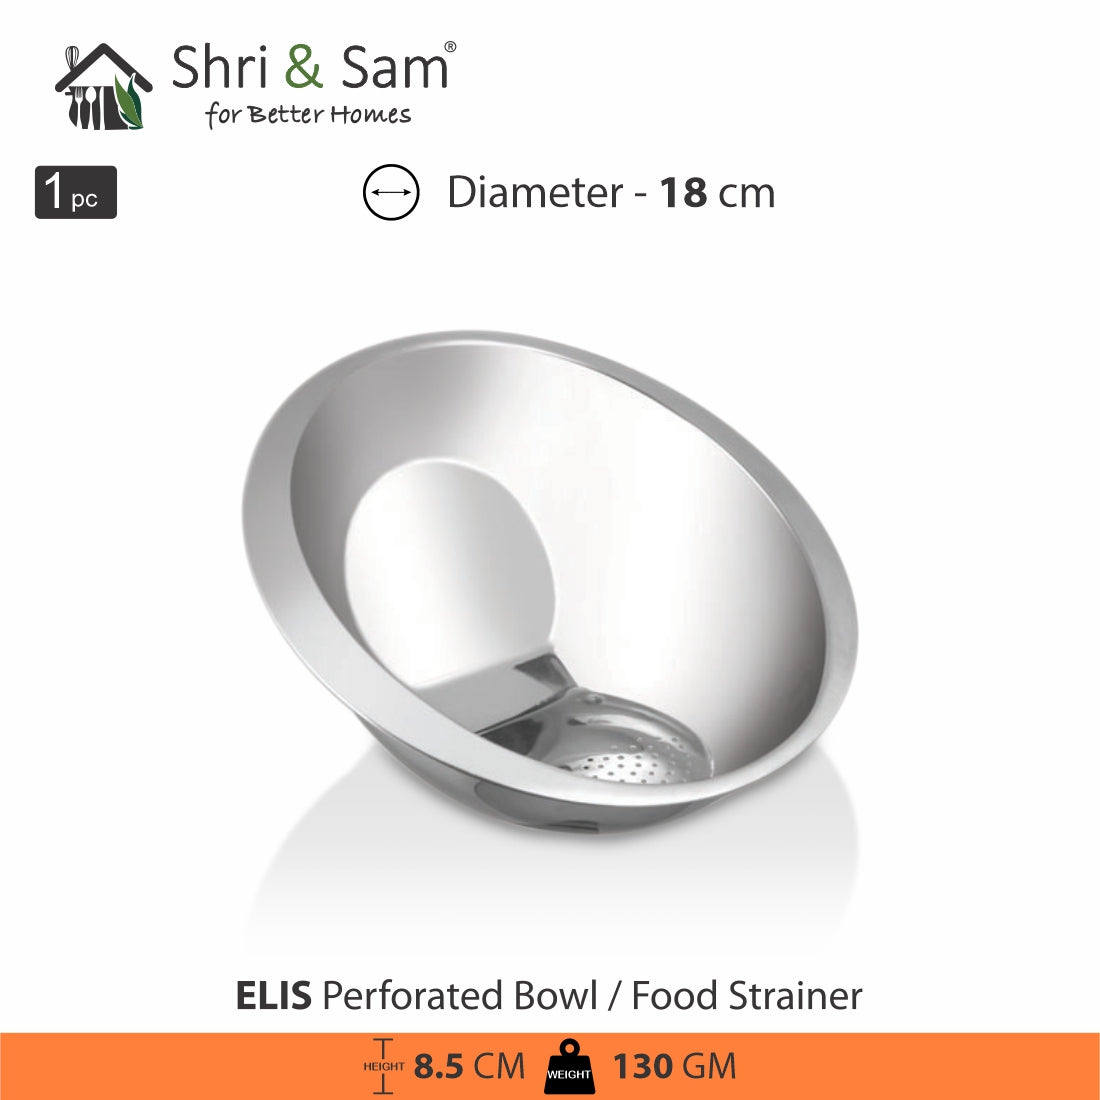 Stainless Steel Food Strainer or Perforated Bowl Elis